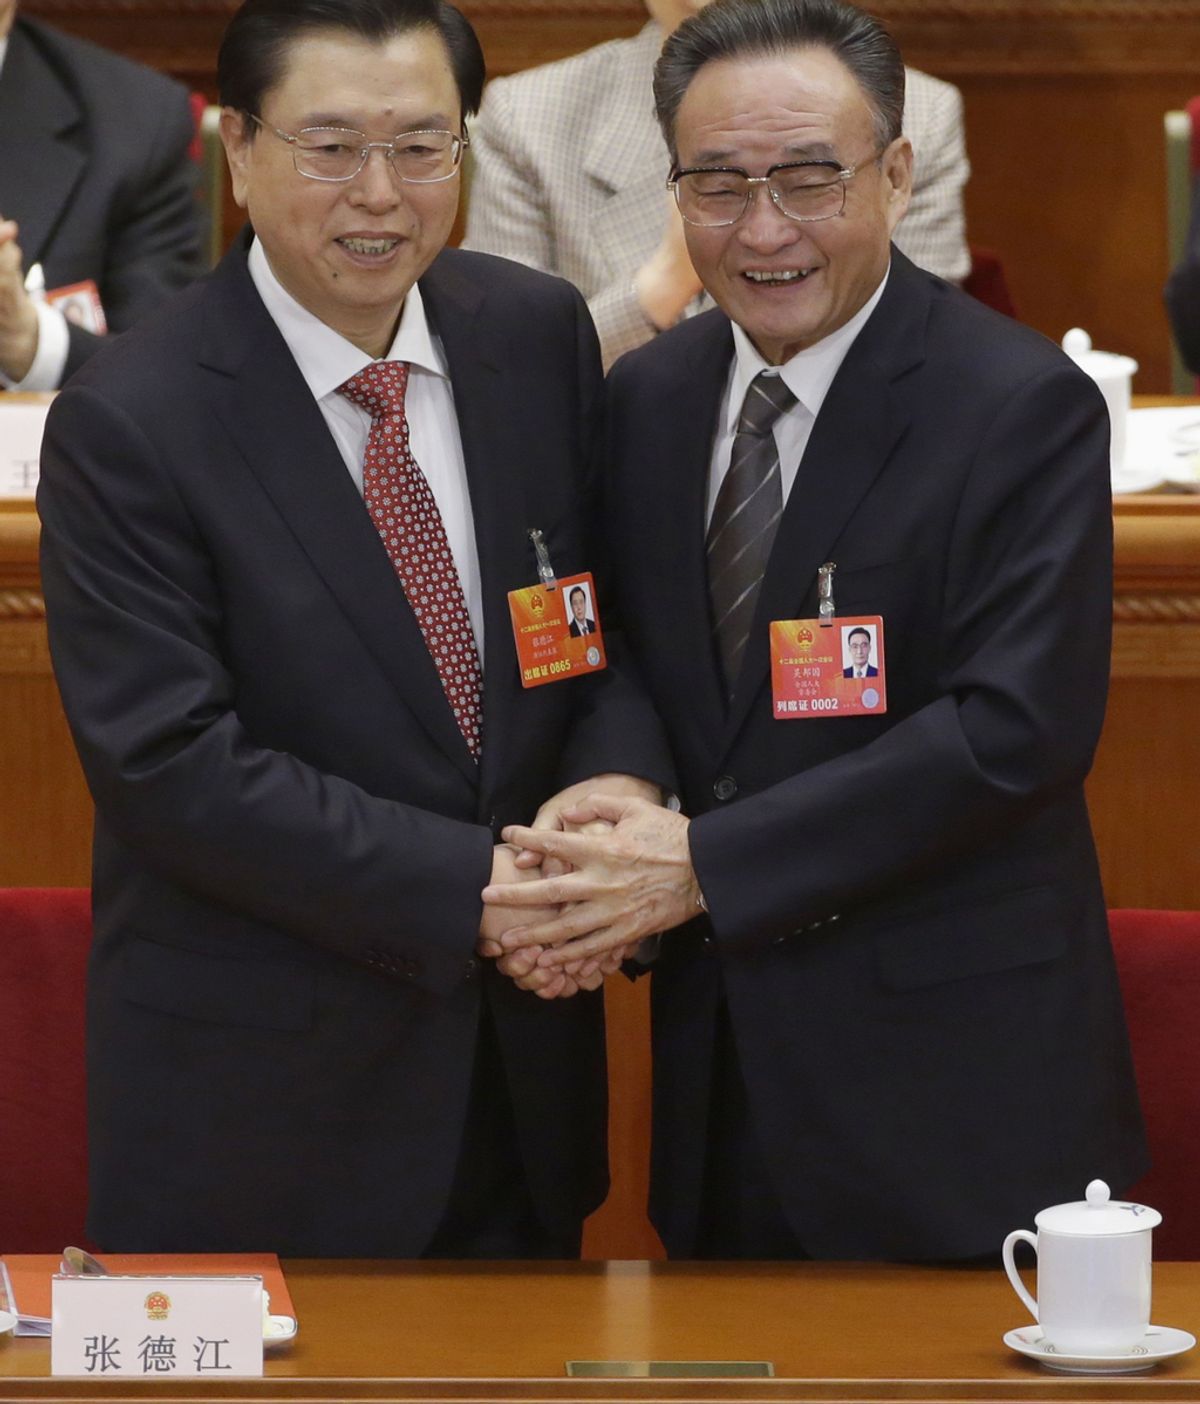 Xi Jinping, elegido formalmente como presidente de China